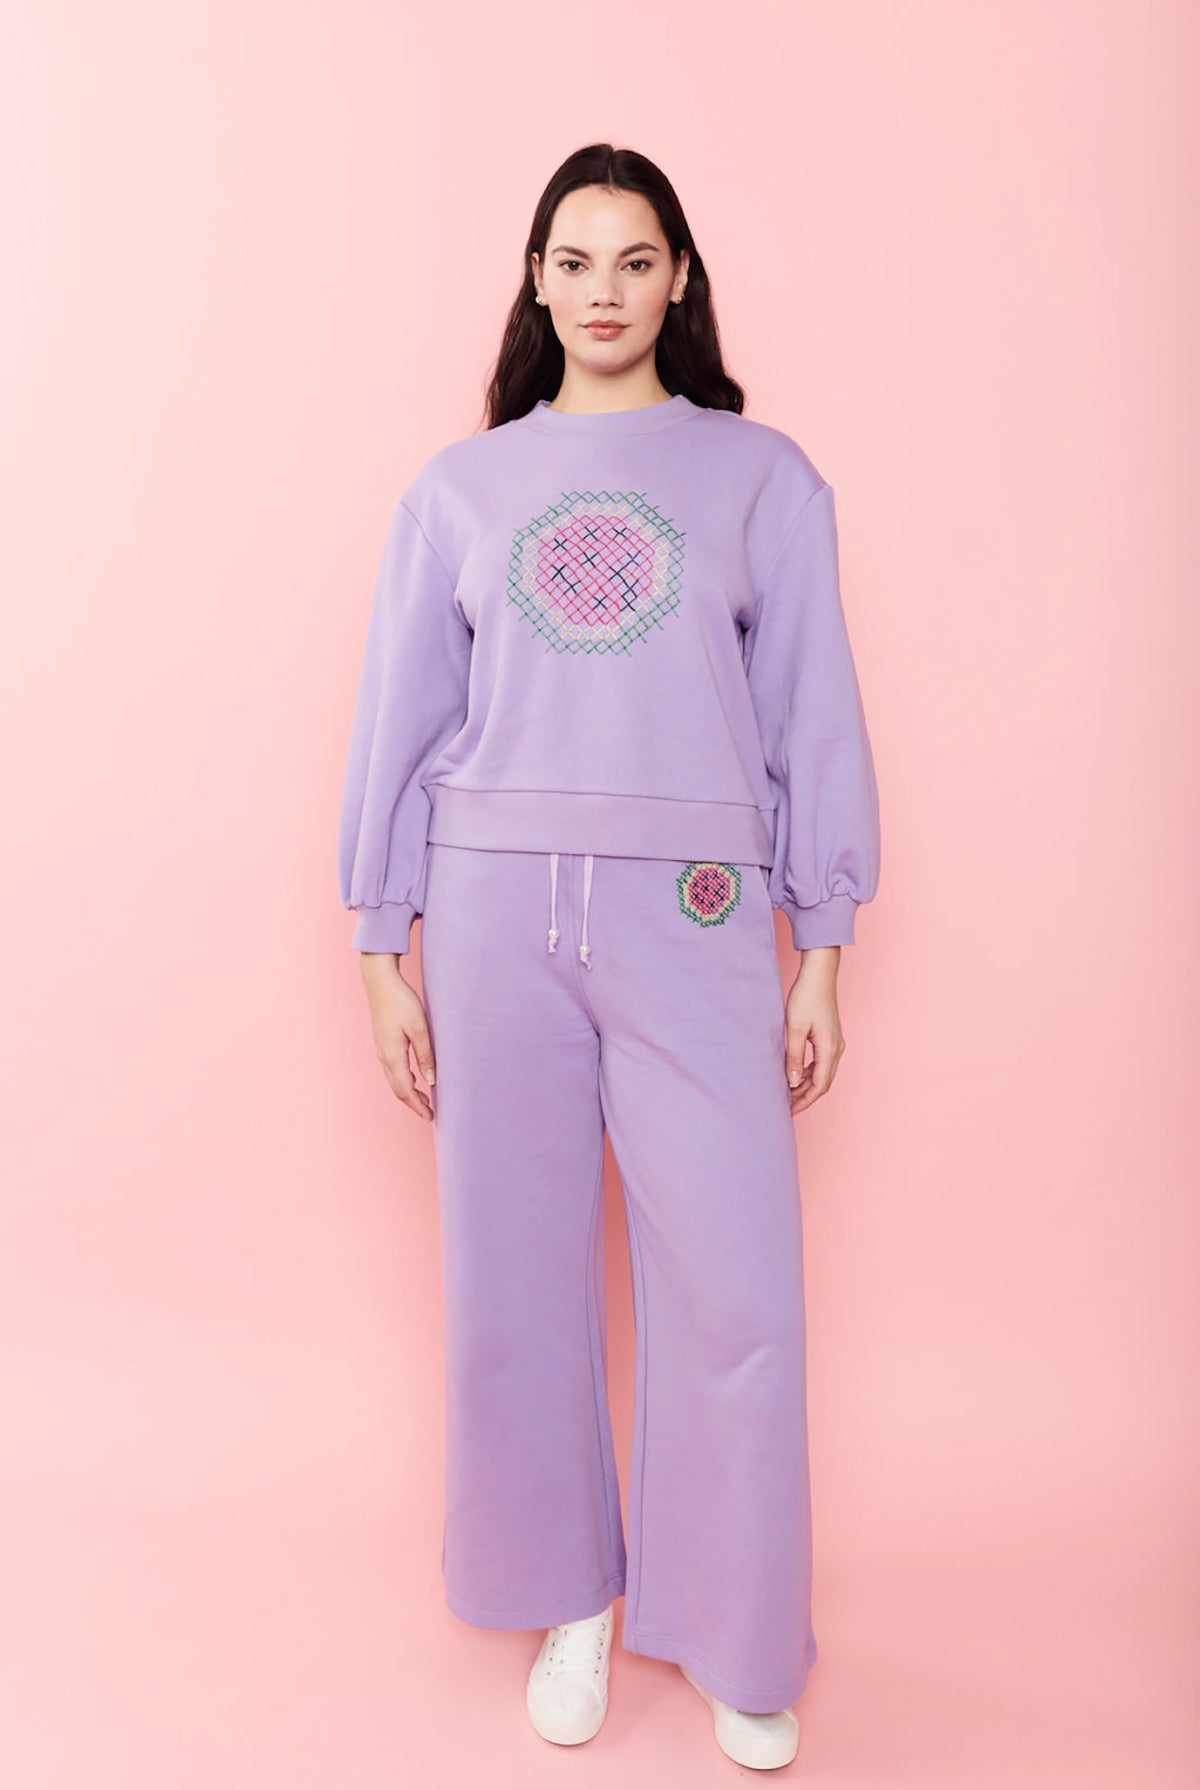 Olivia Rubin Cecilia Lilac Cross Stitch Sweater - L Lilac product